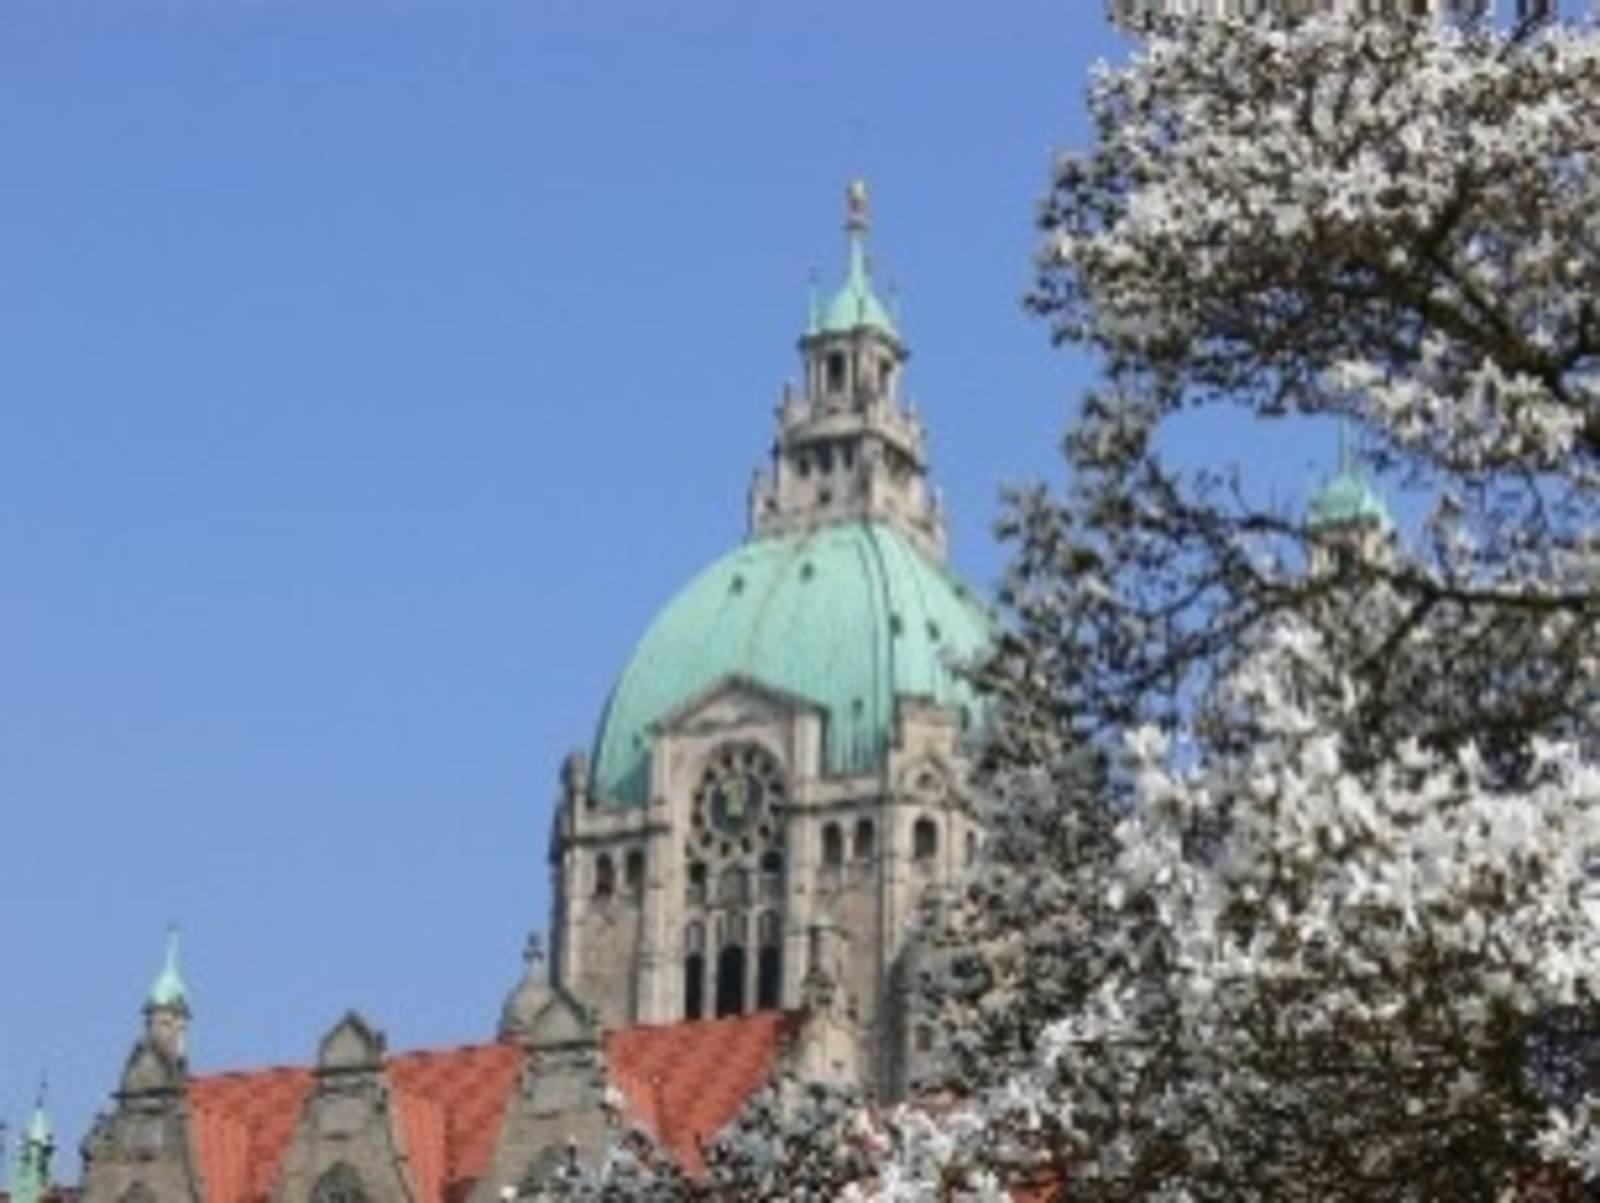 Rathauskuppel vor blauem Himmel mit Magnolien